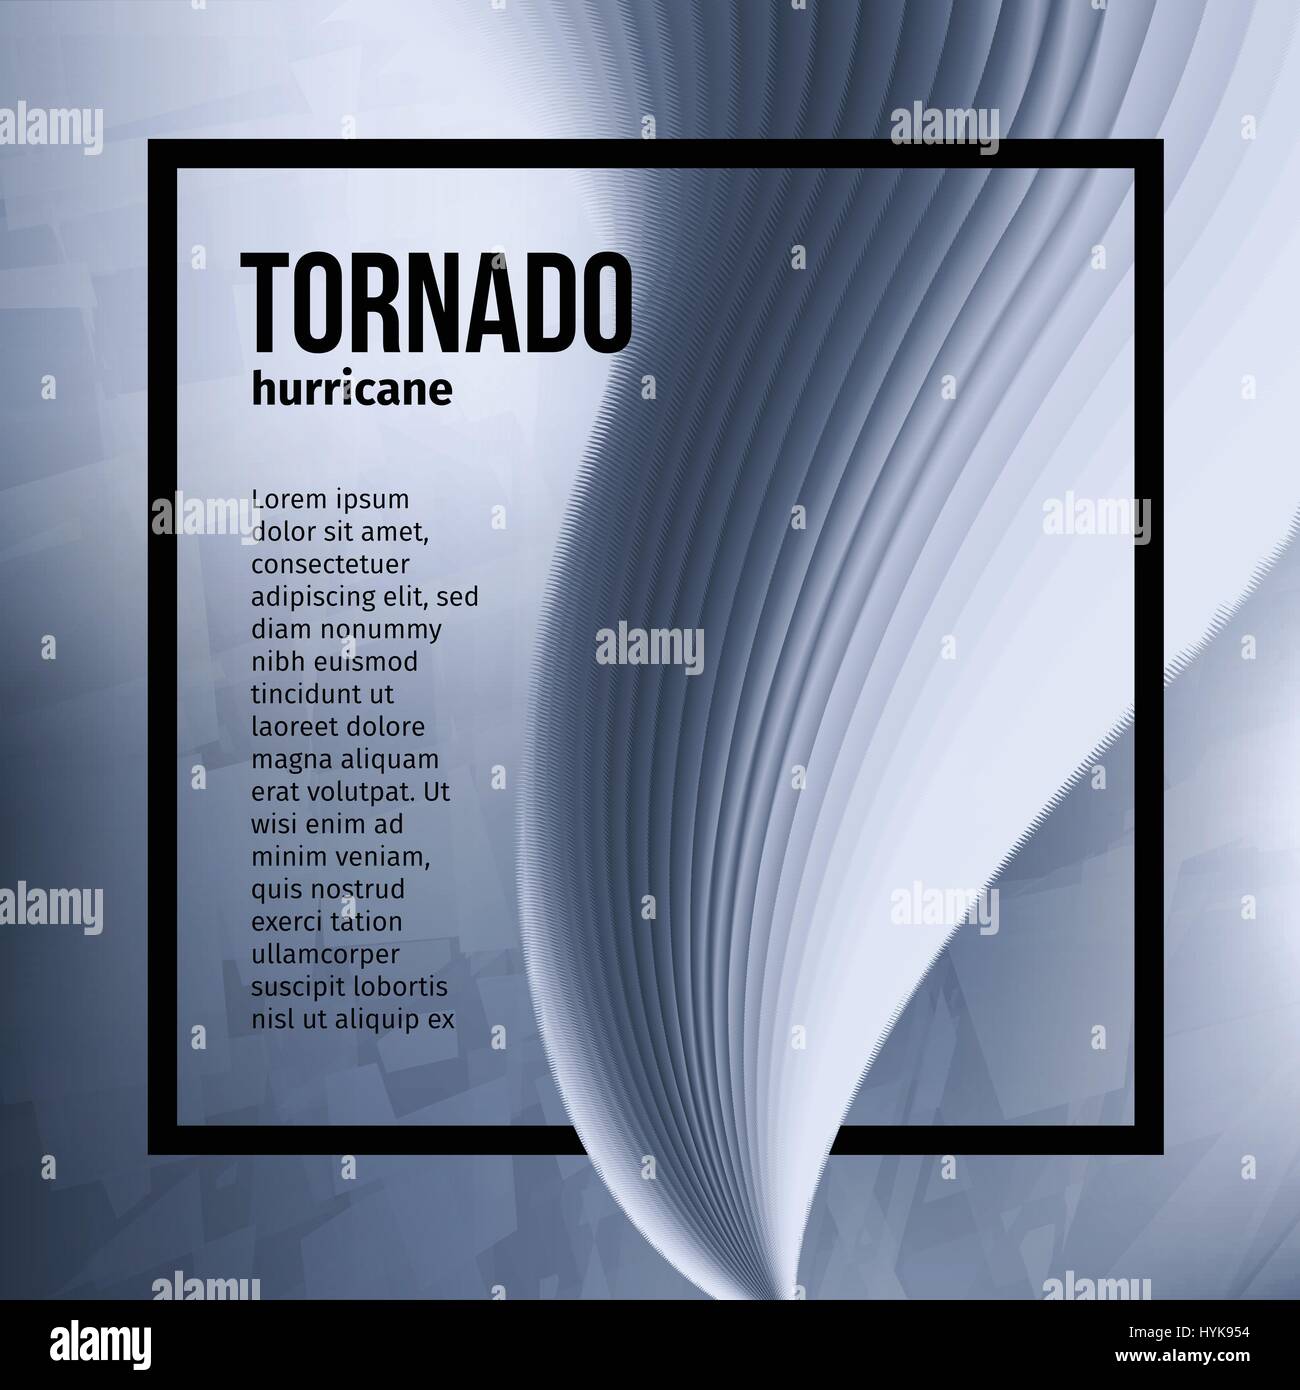 Abstract isolato tornado uragano disastro naturale illustrazione vettoriale Illustrazione Vettoriale